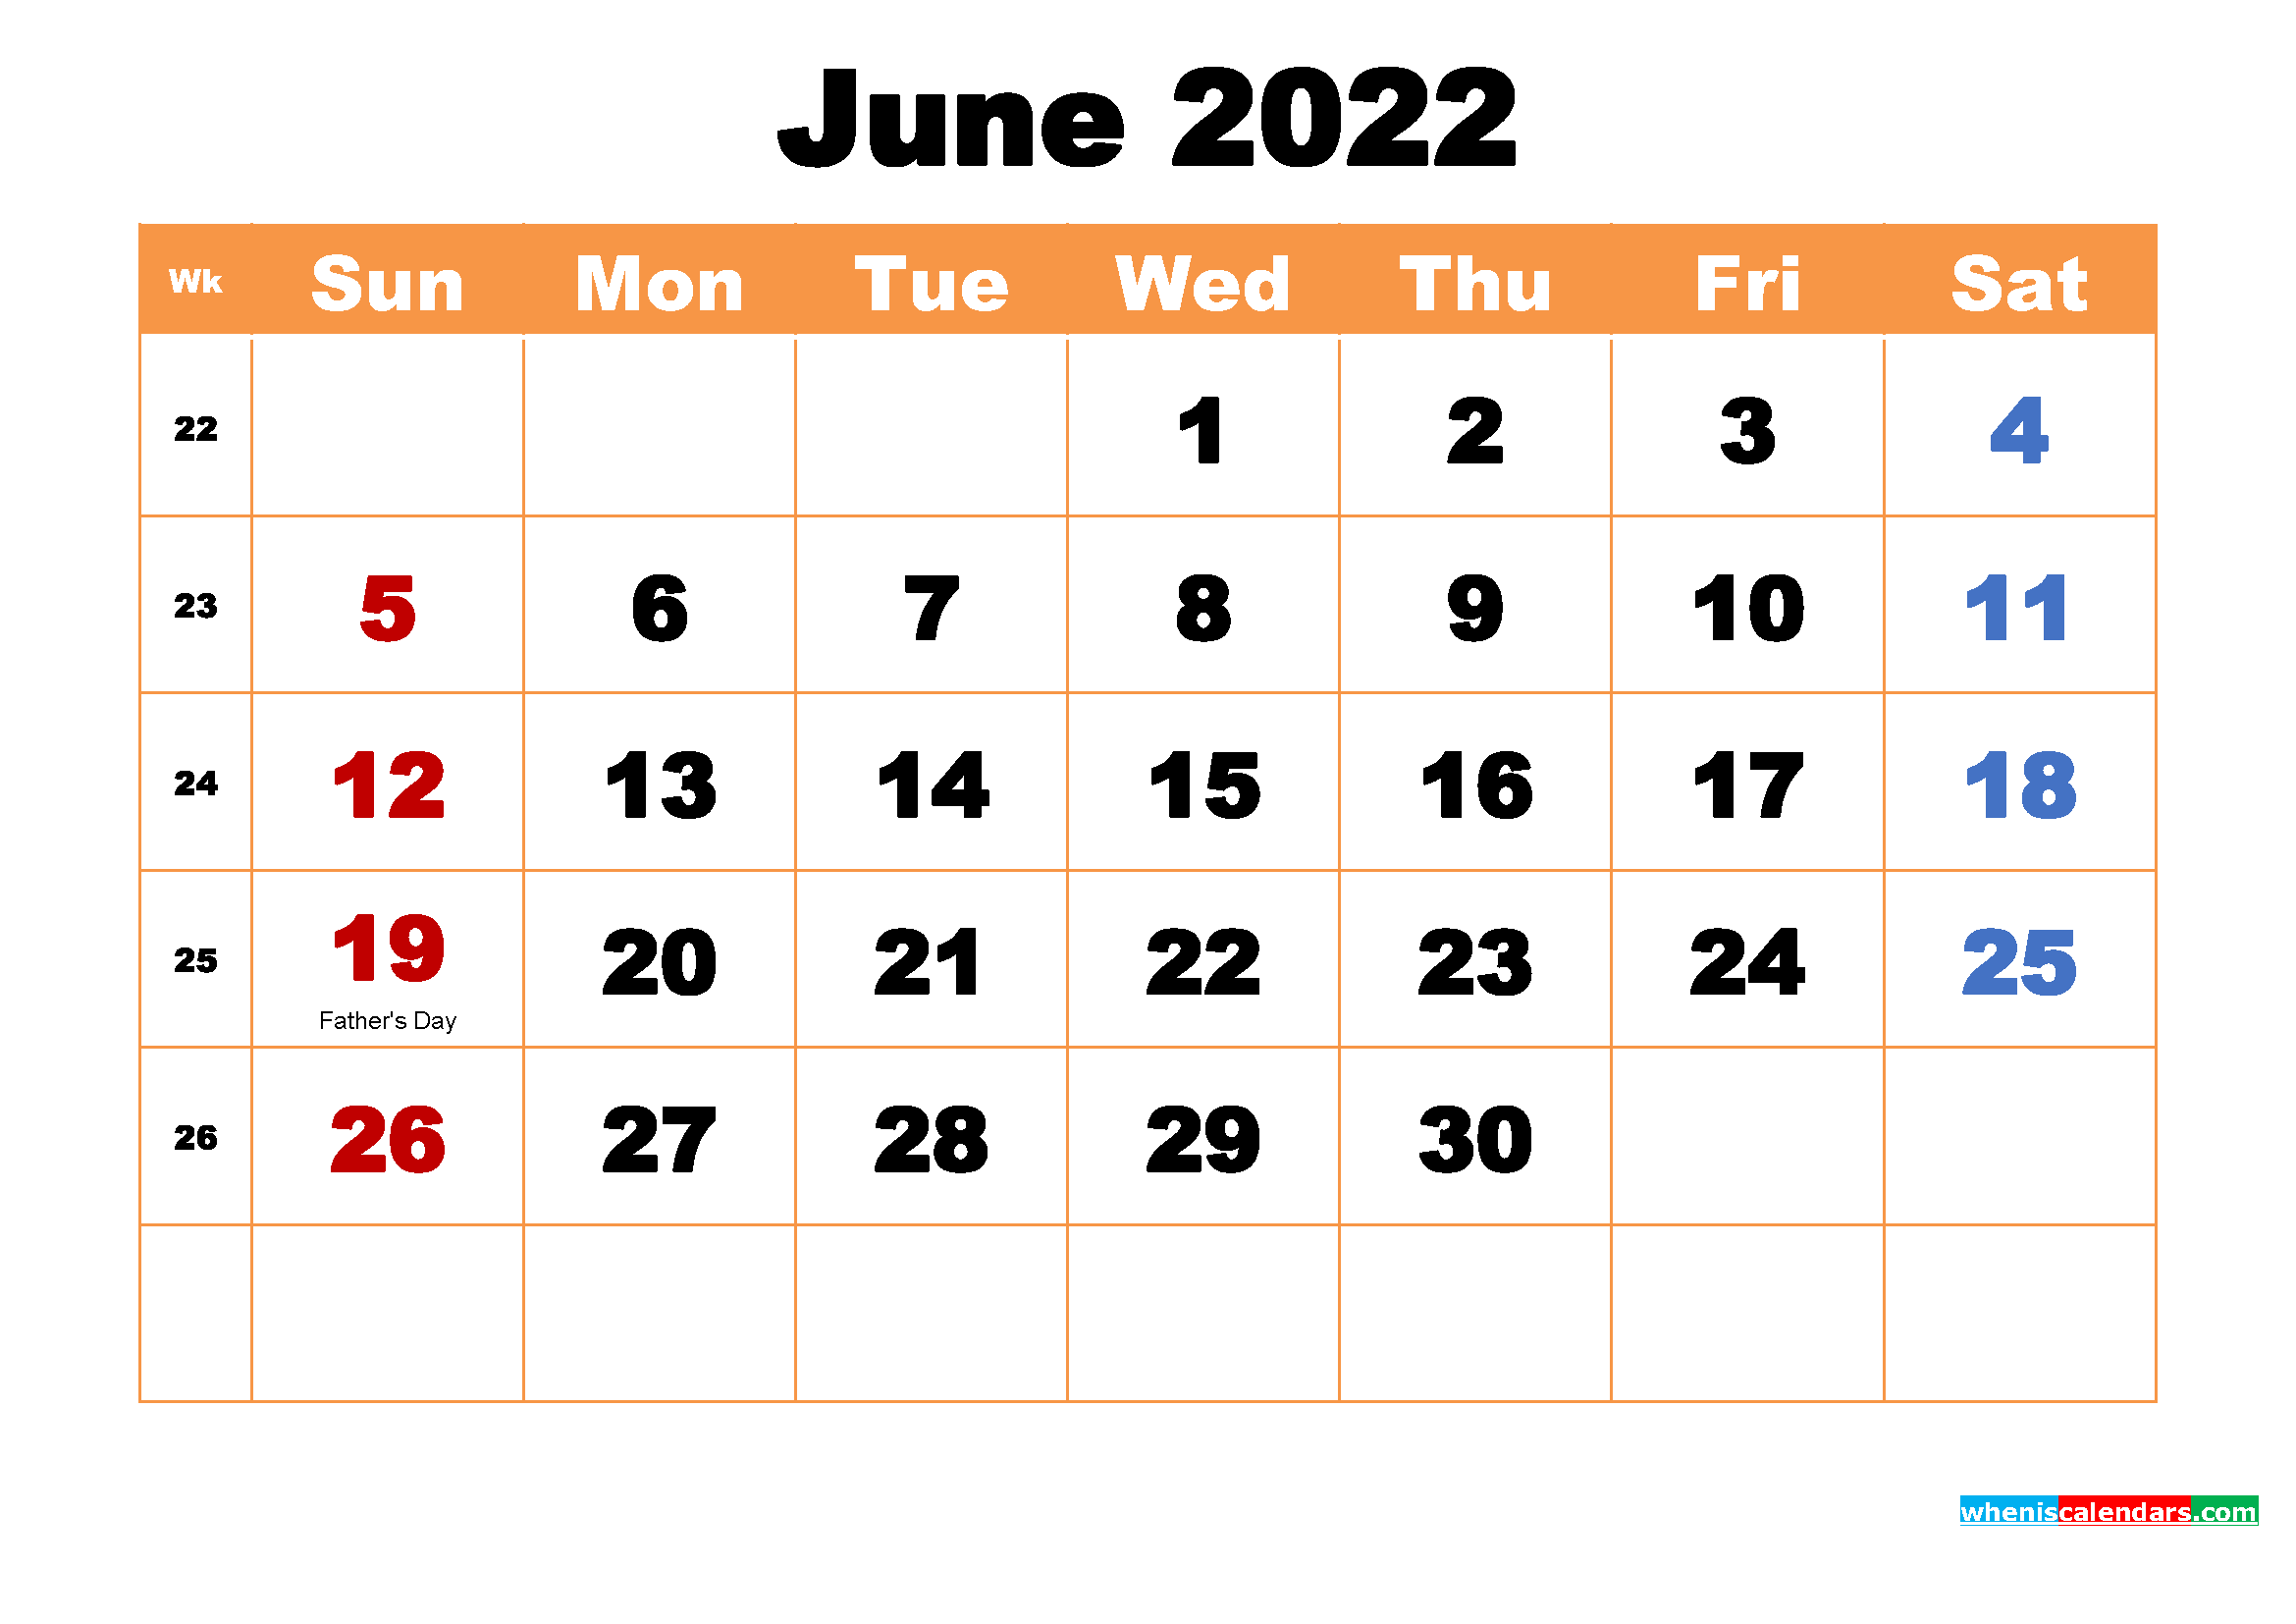 Free download June 2022 Calendar Wallpapers High Resolution [2339x1654] for your Desktop, Mobile & Tablet